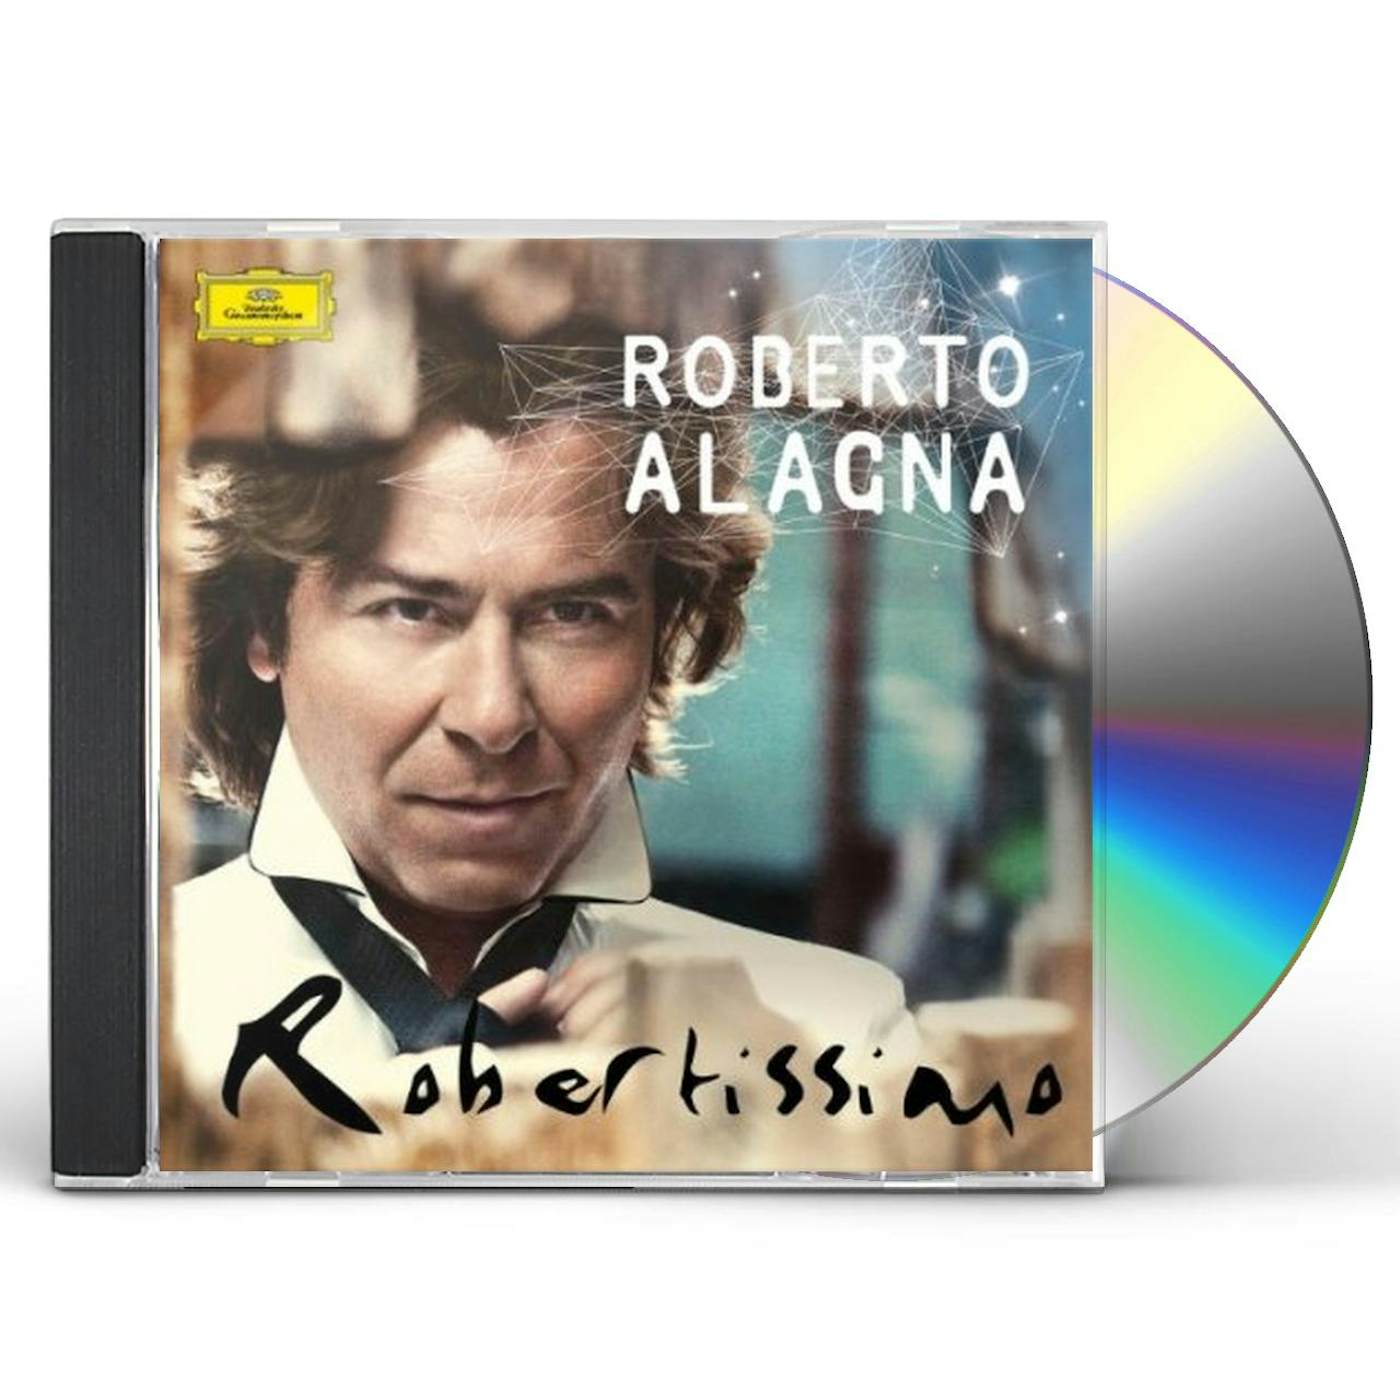 Roberto Alagna ROBERTISSIMO CD